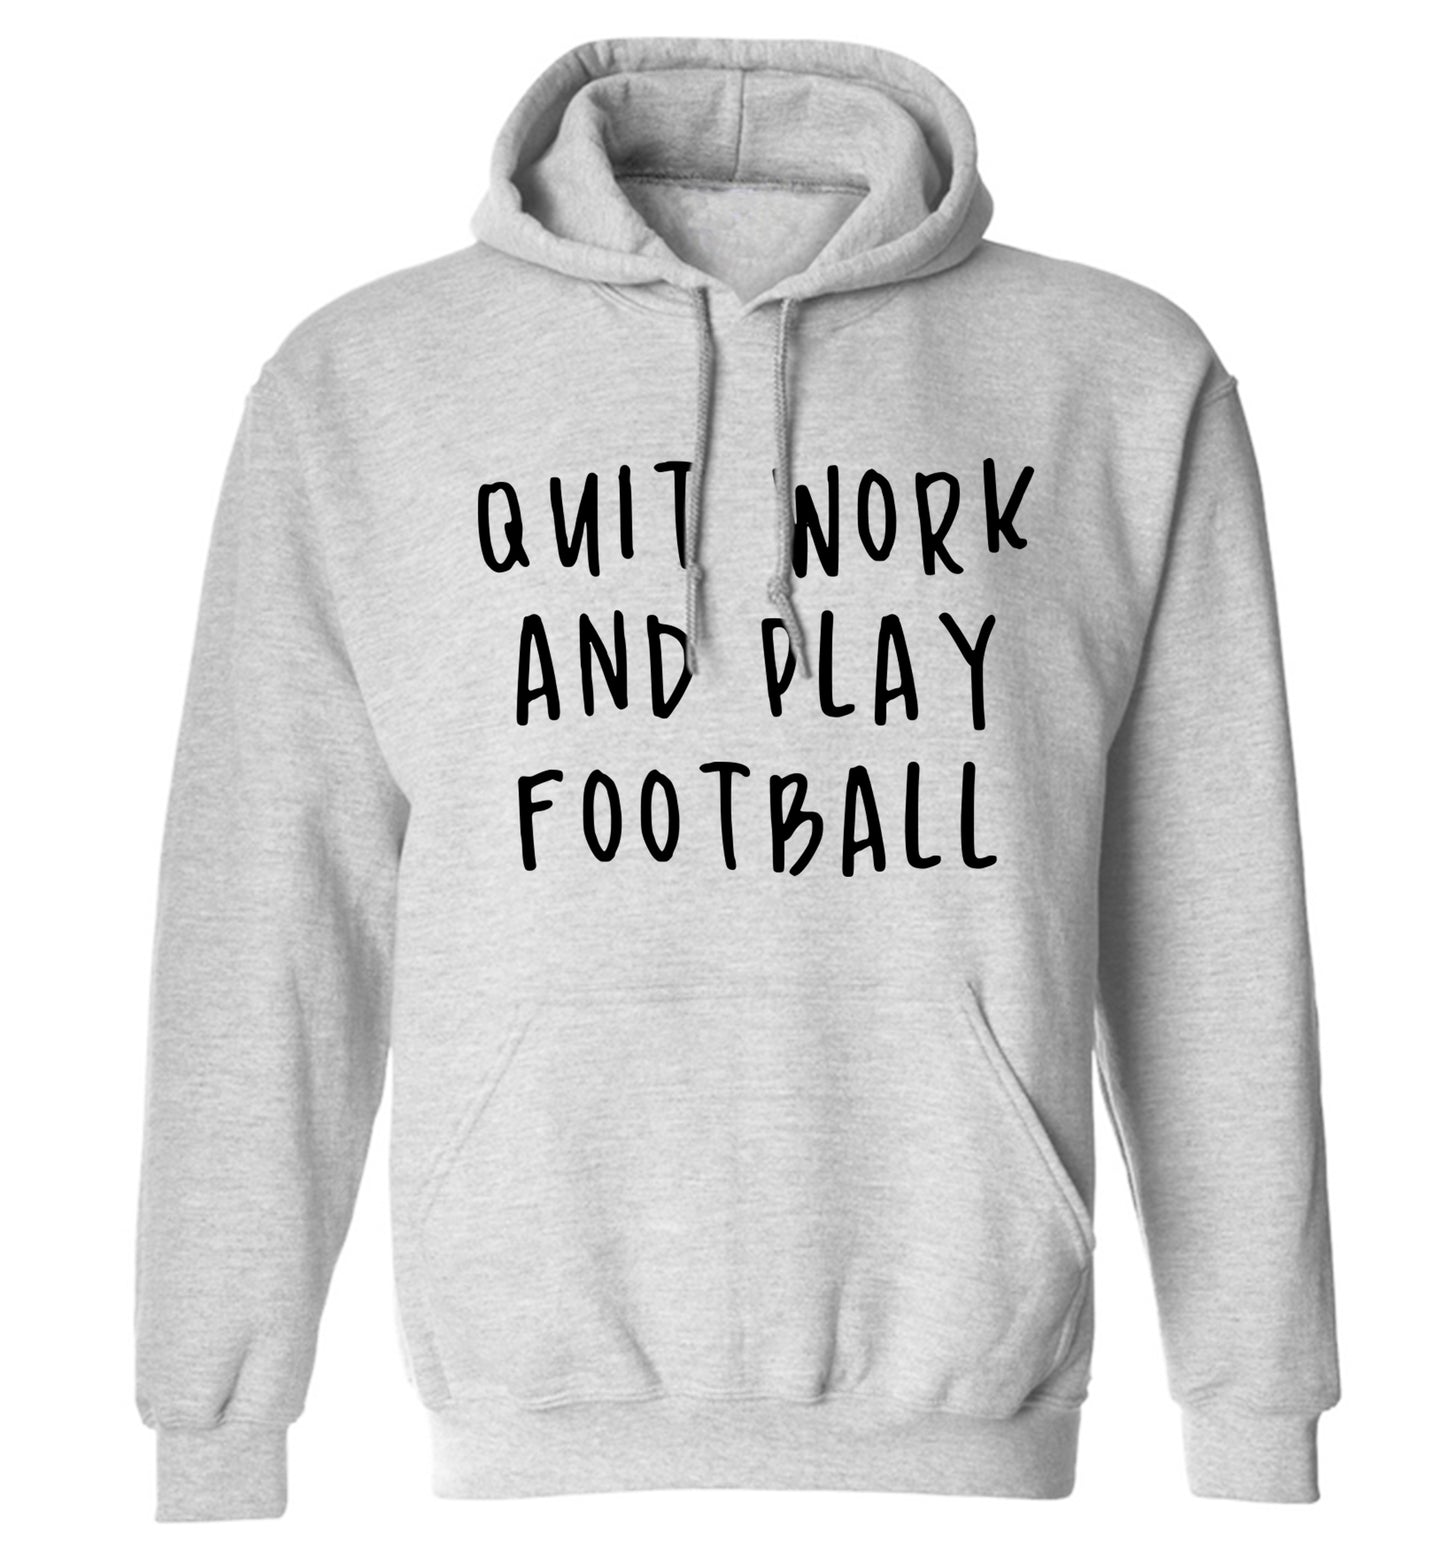 Quit work play football adults unisexgrey hoodie 2XL